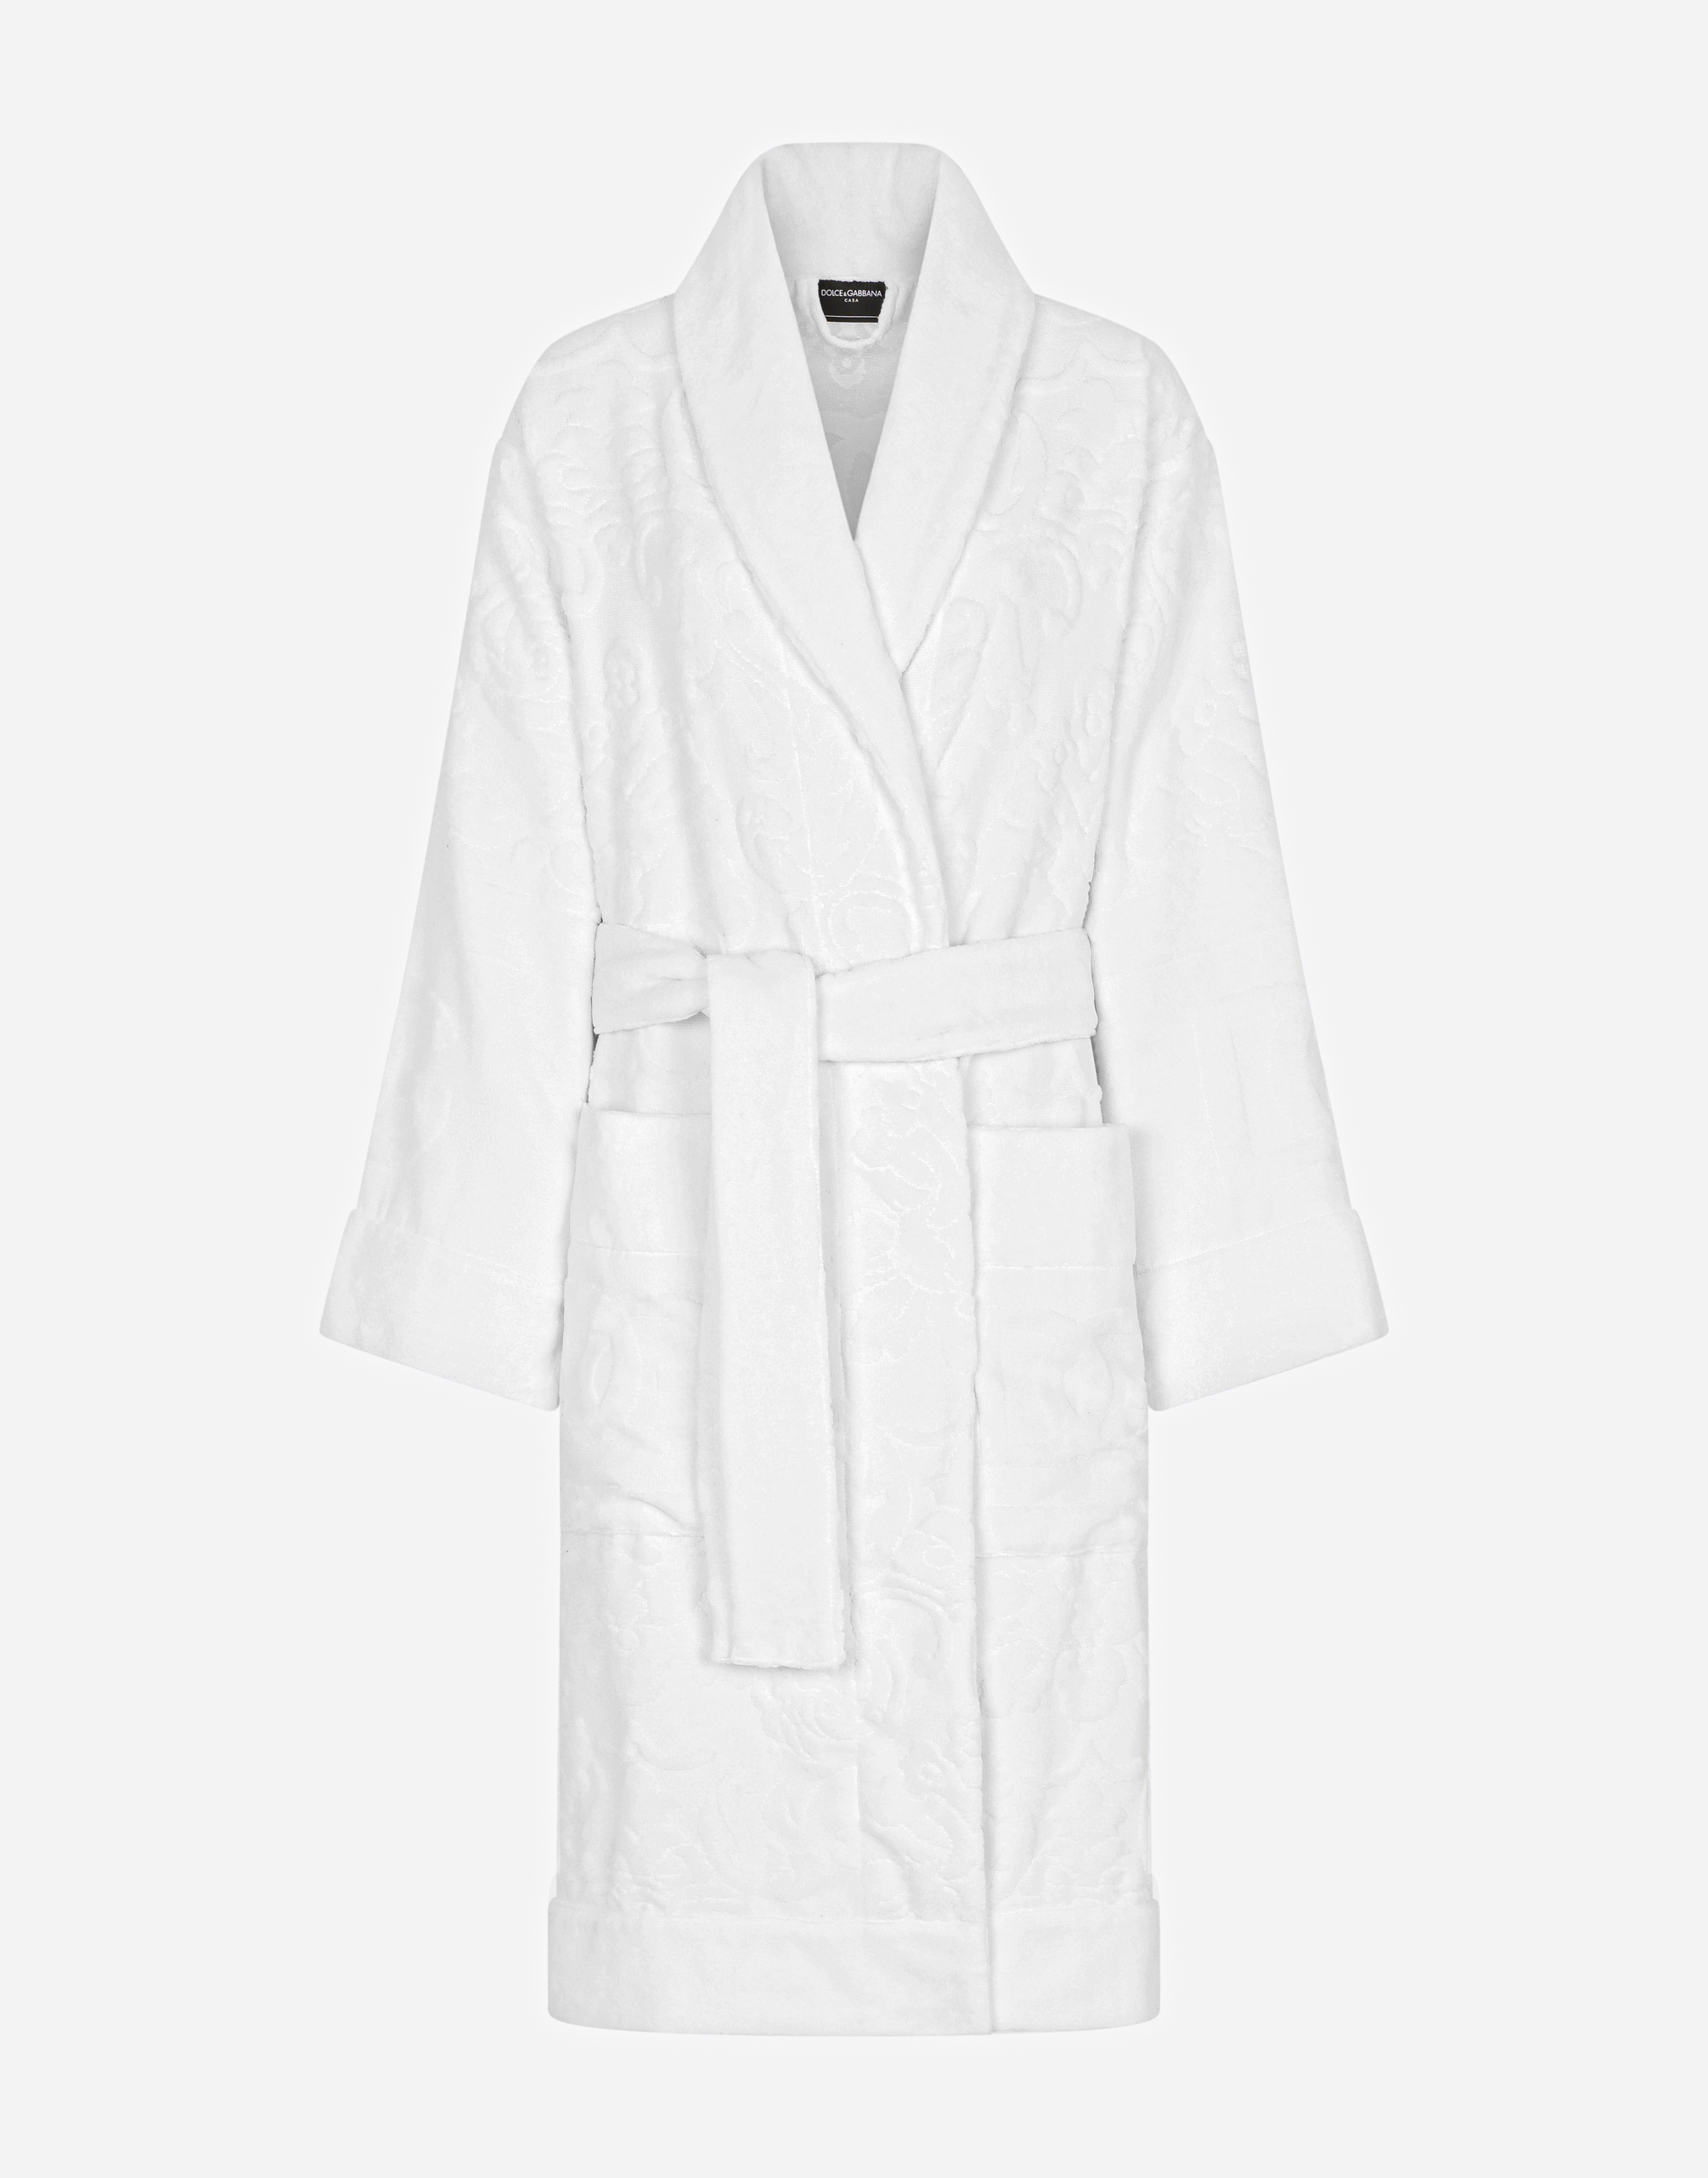 Bath Robe in Terry Cotton Jacquard